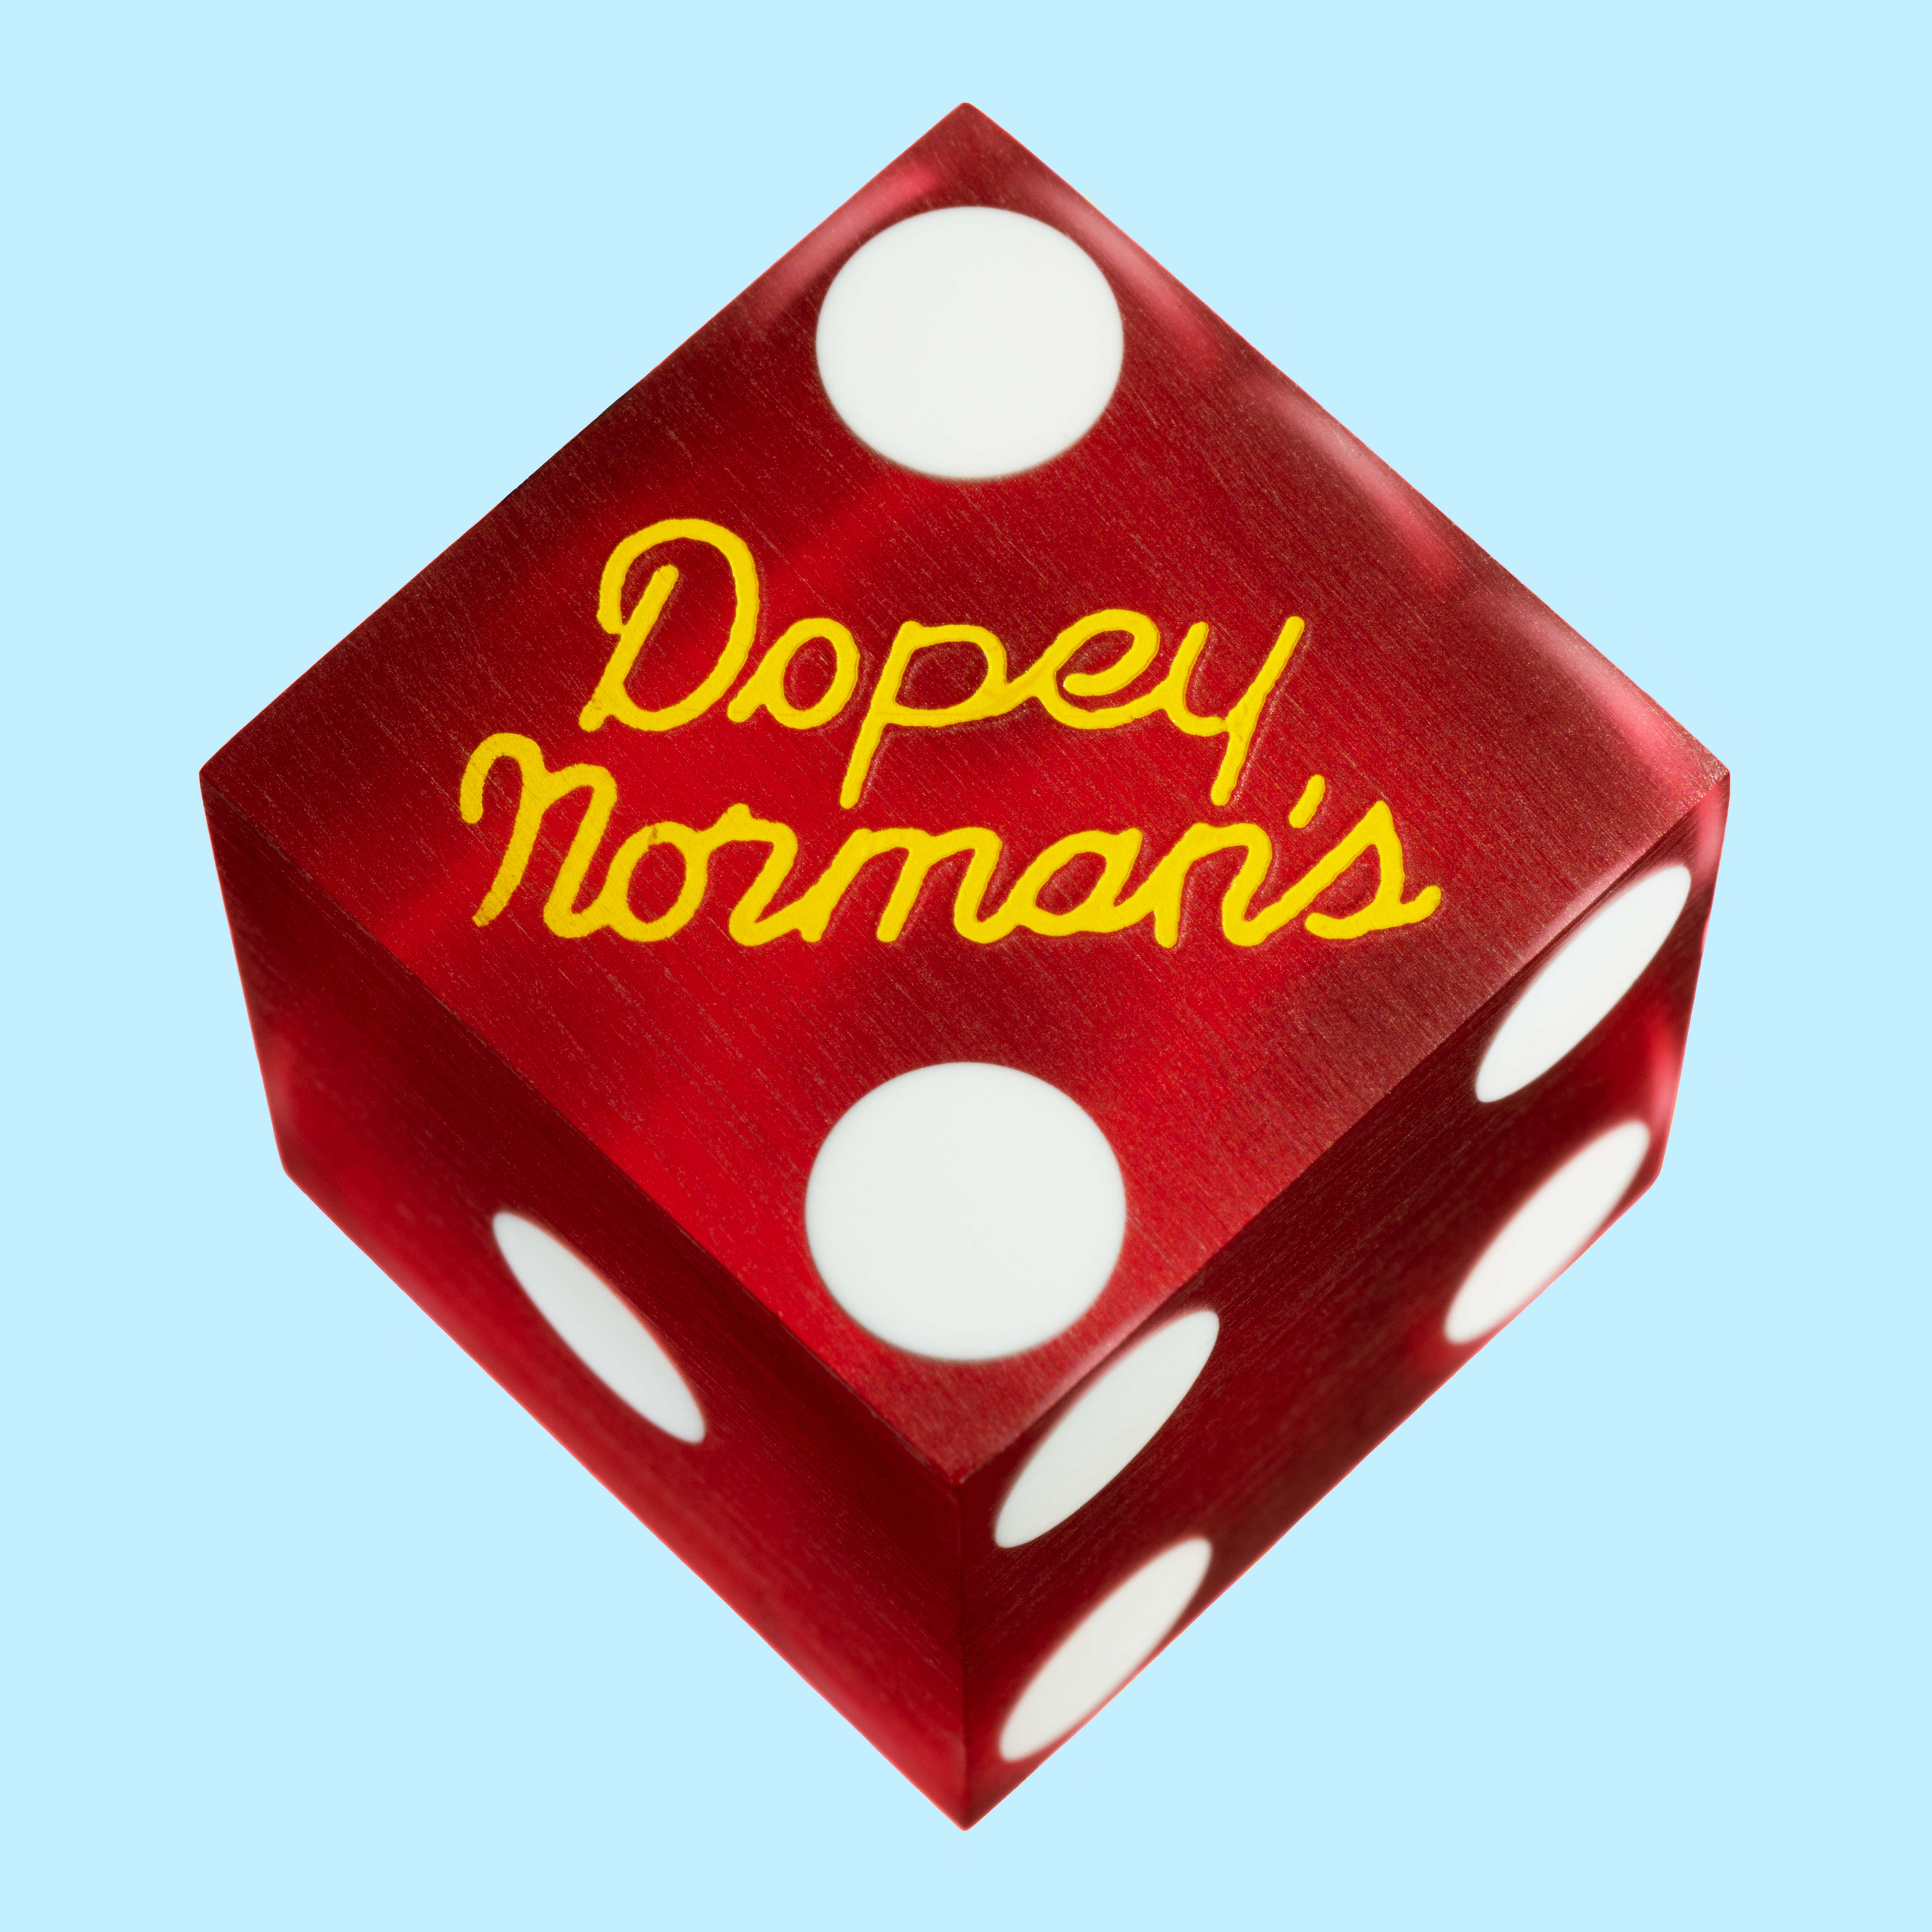 Dopey_Normans_4327_SFW